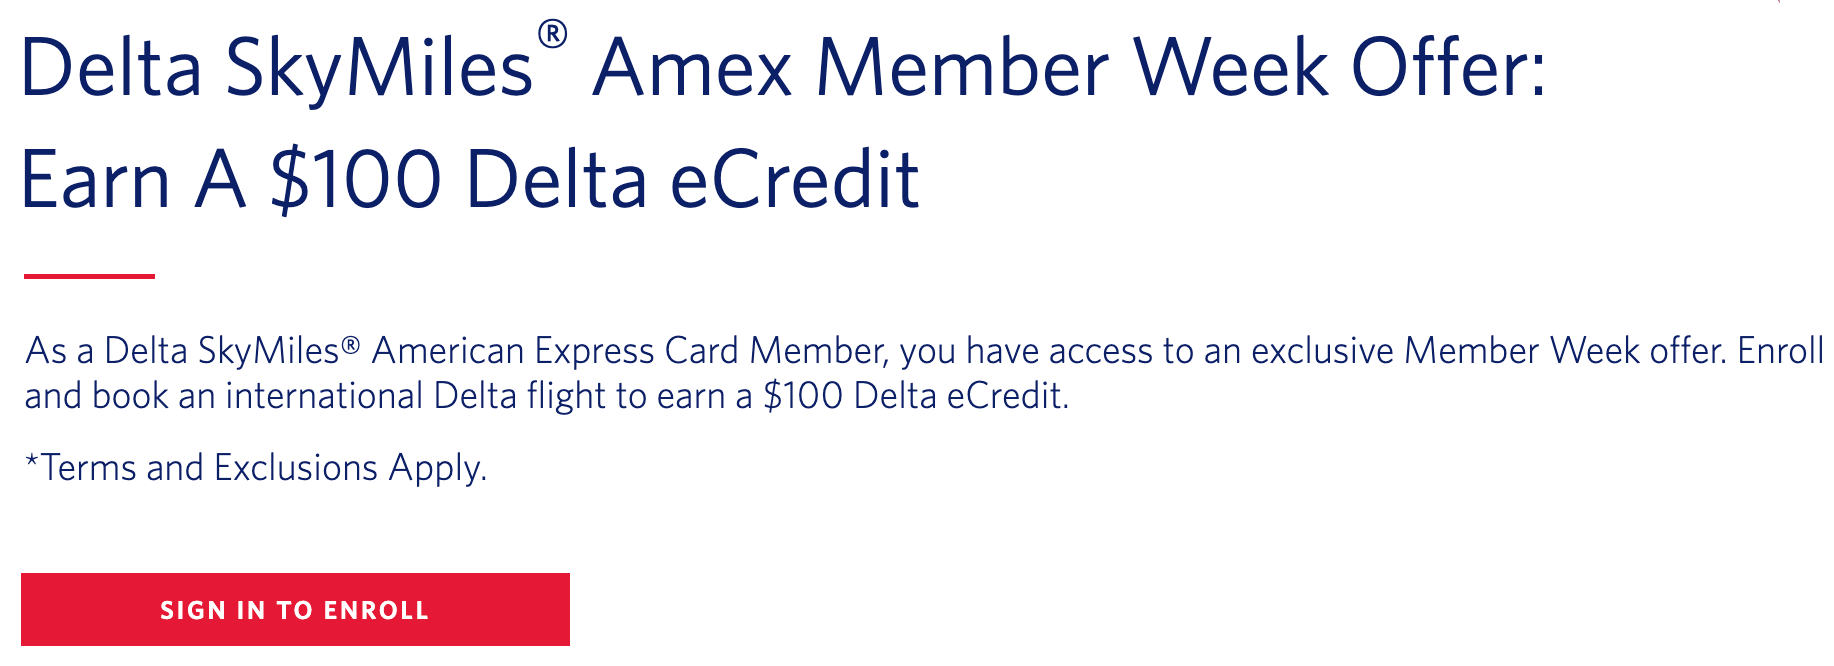 Amex Delta Member Week offer